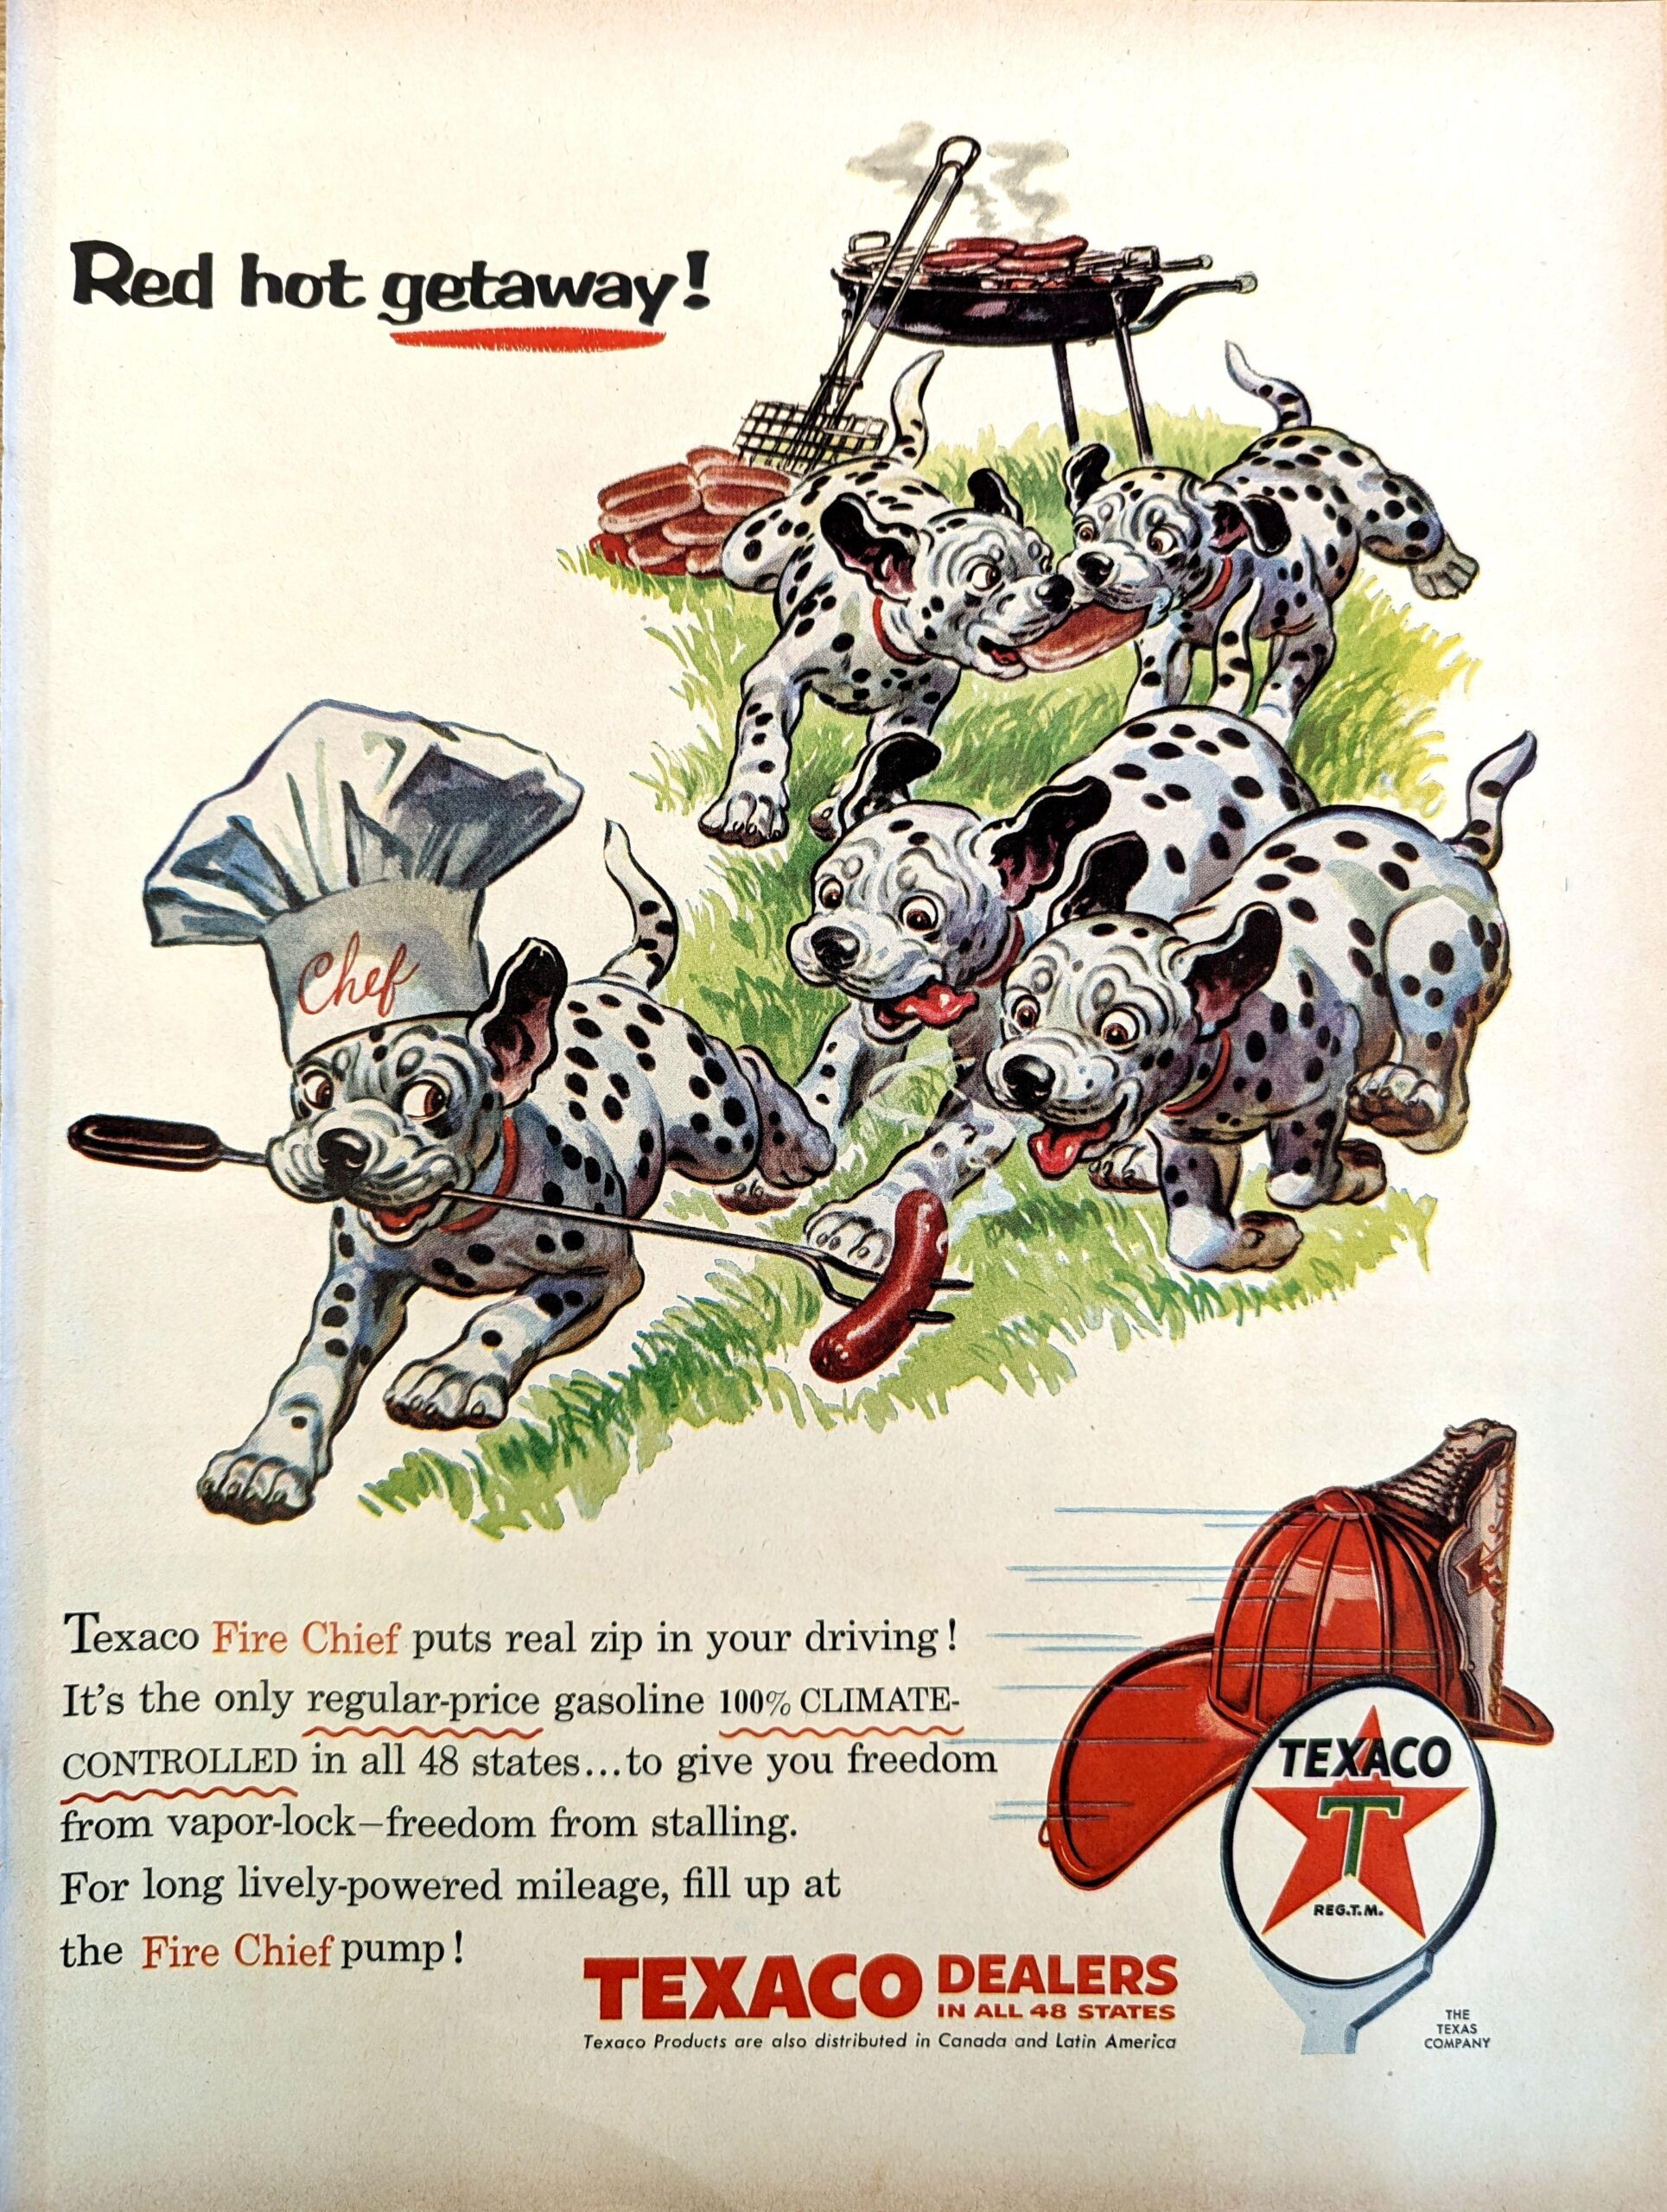 “Red hot getaway!”, Texaco, September 10 1956